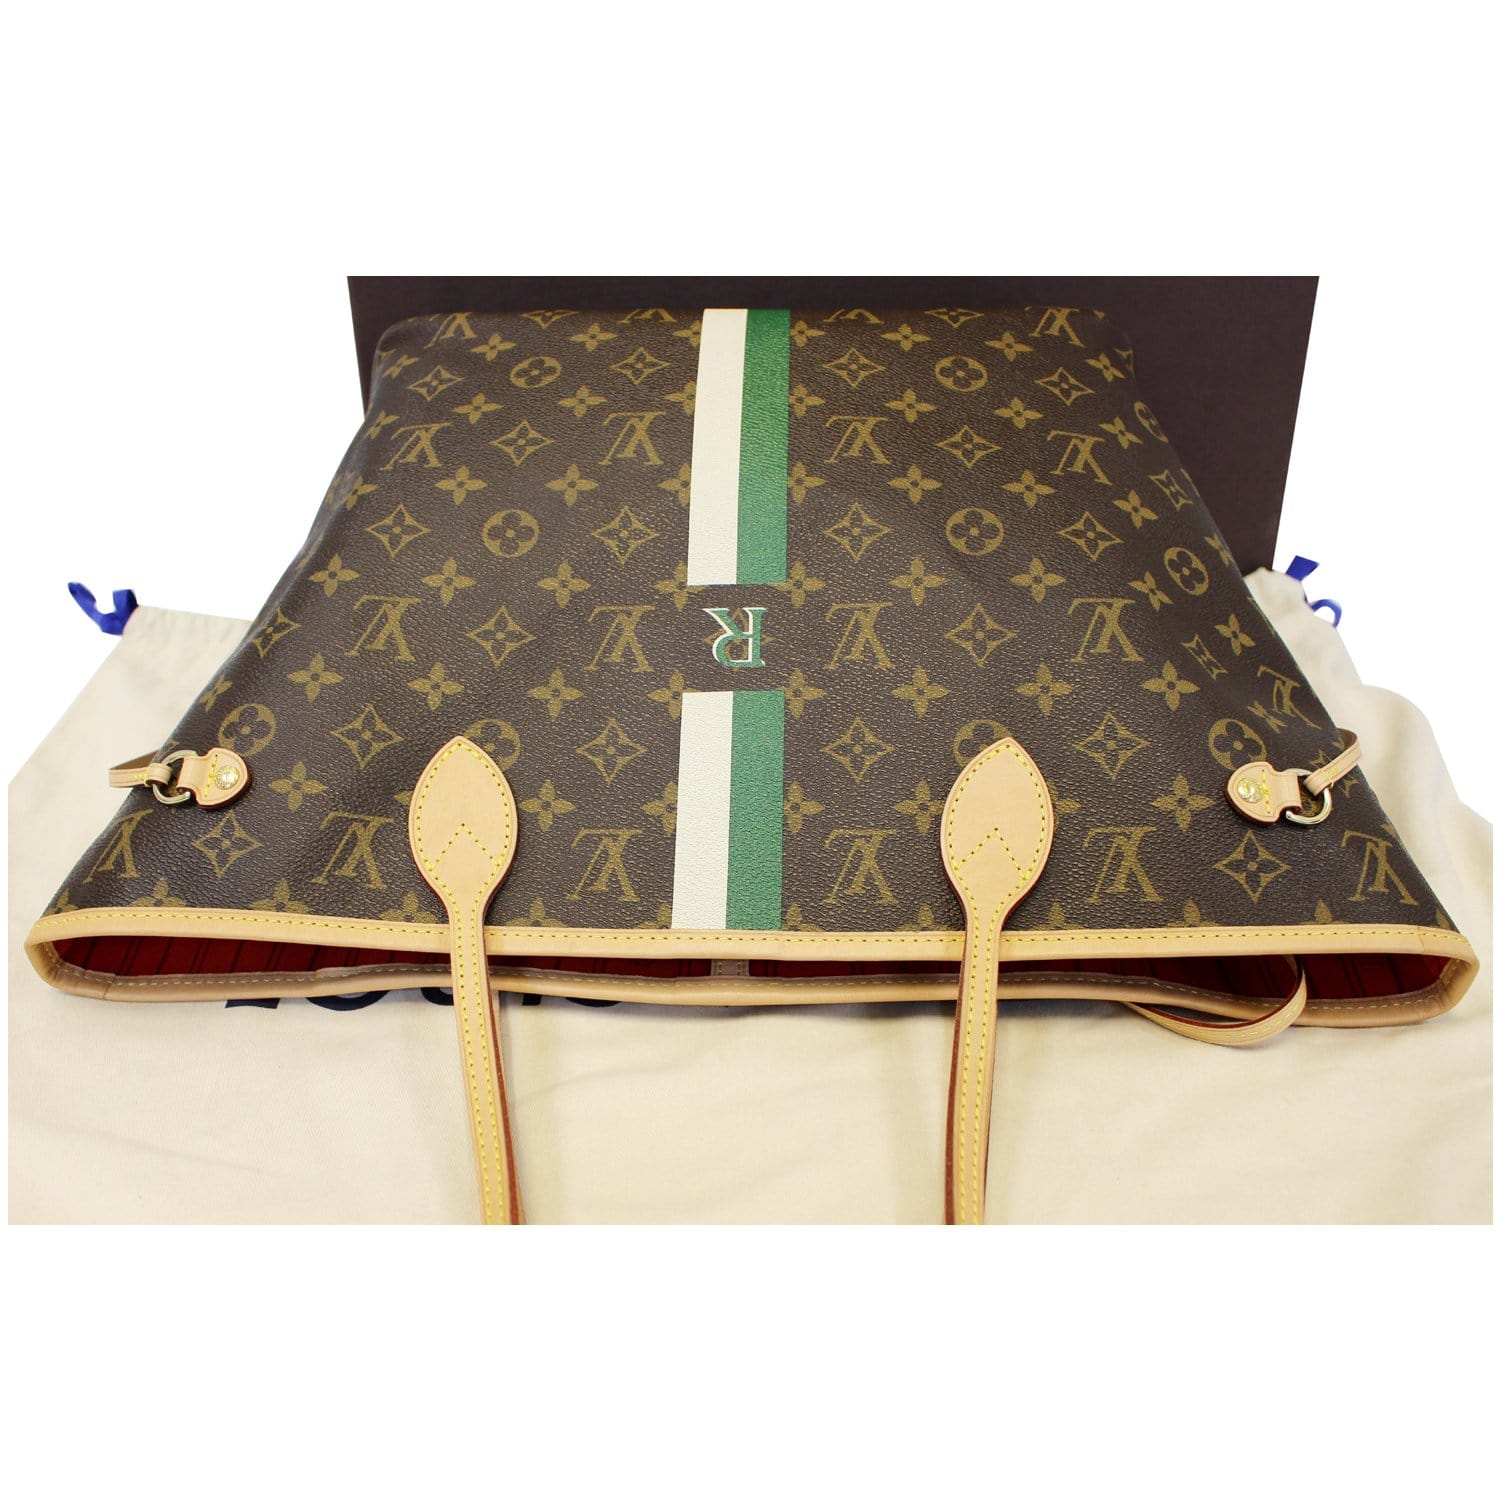 Louis Vuitton, Bags, Louis Vuitton Mon Monogram Neverfull Mm